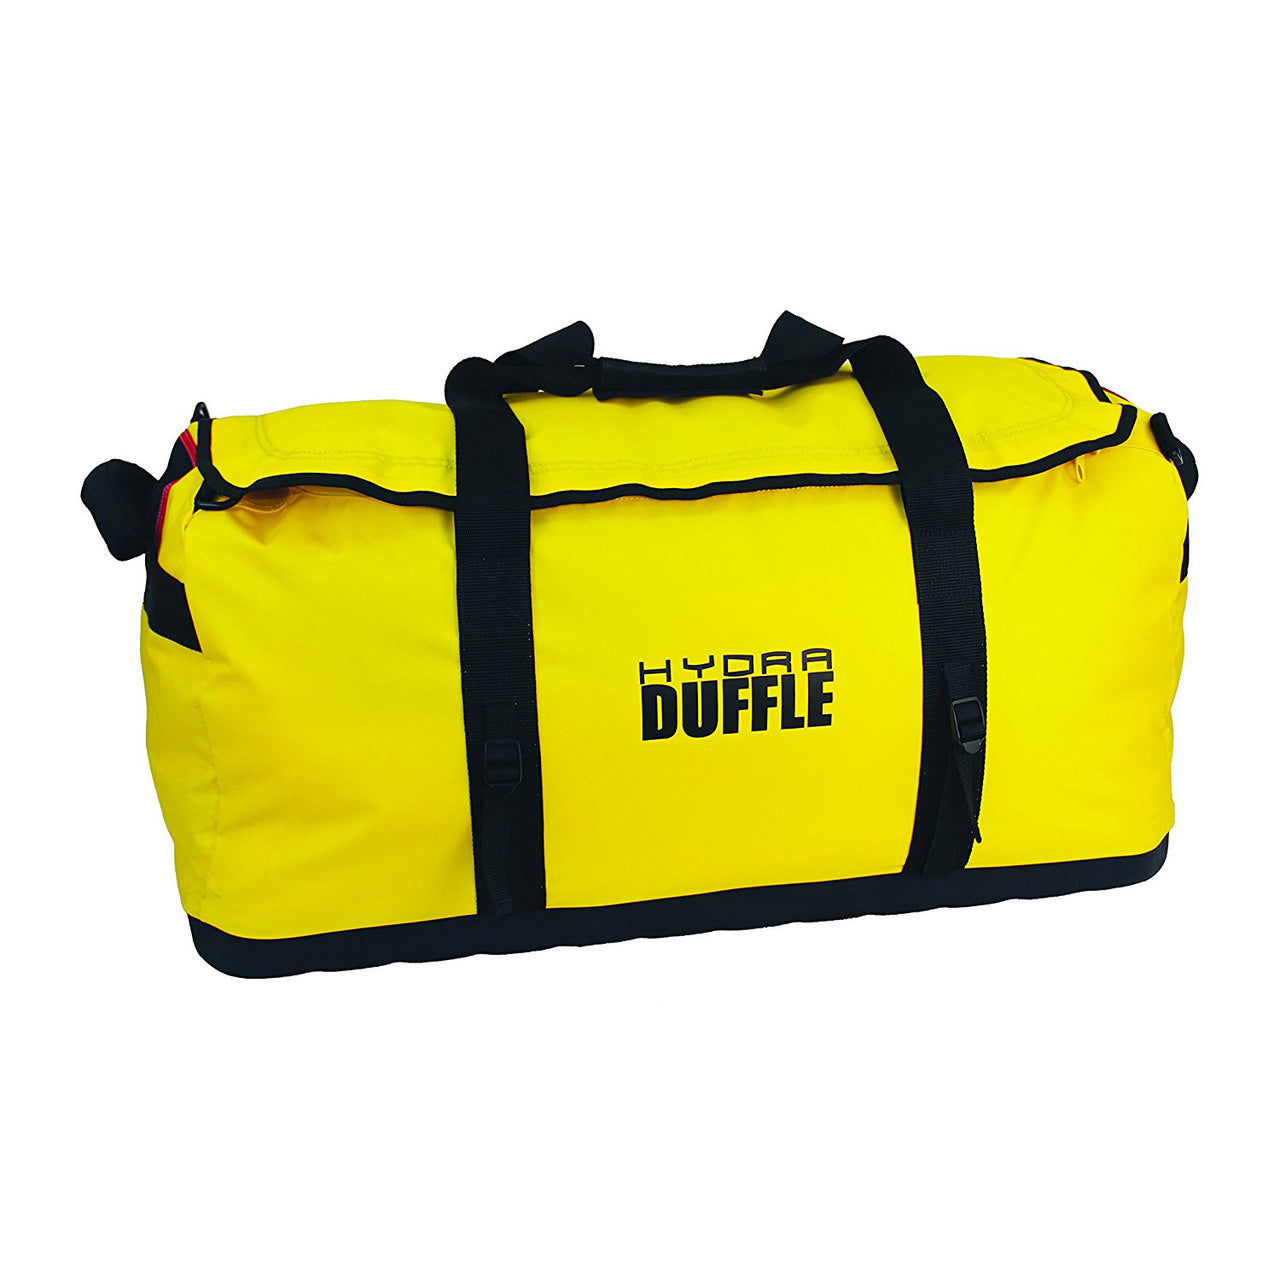 TexSport Hydra Duffle Bag II - Yellow